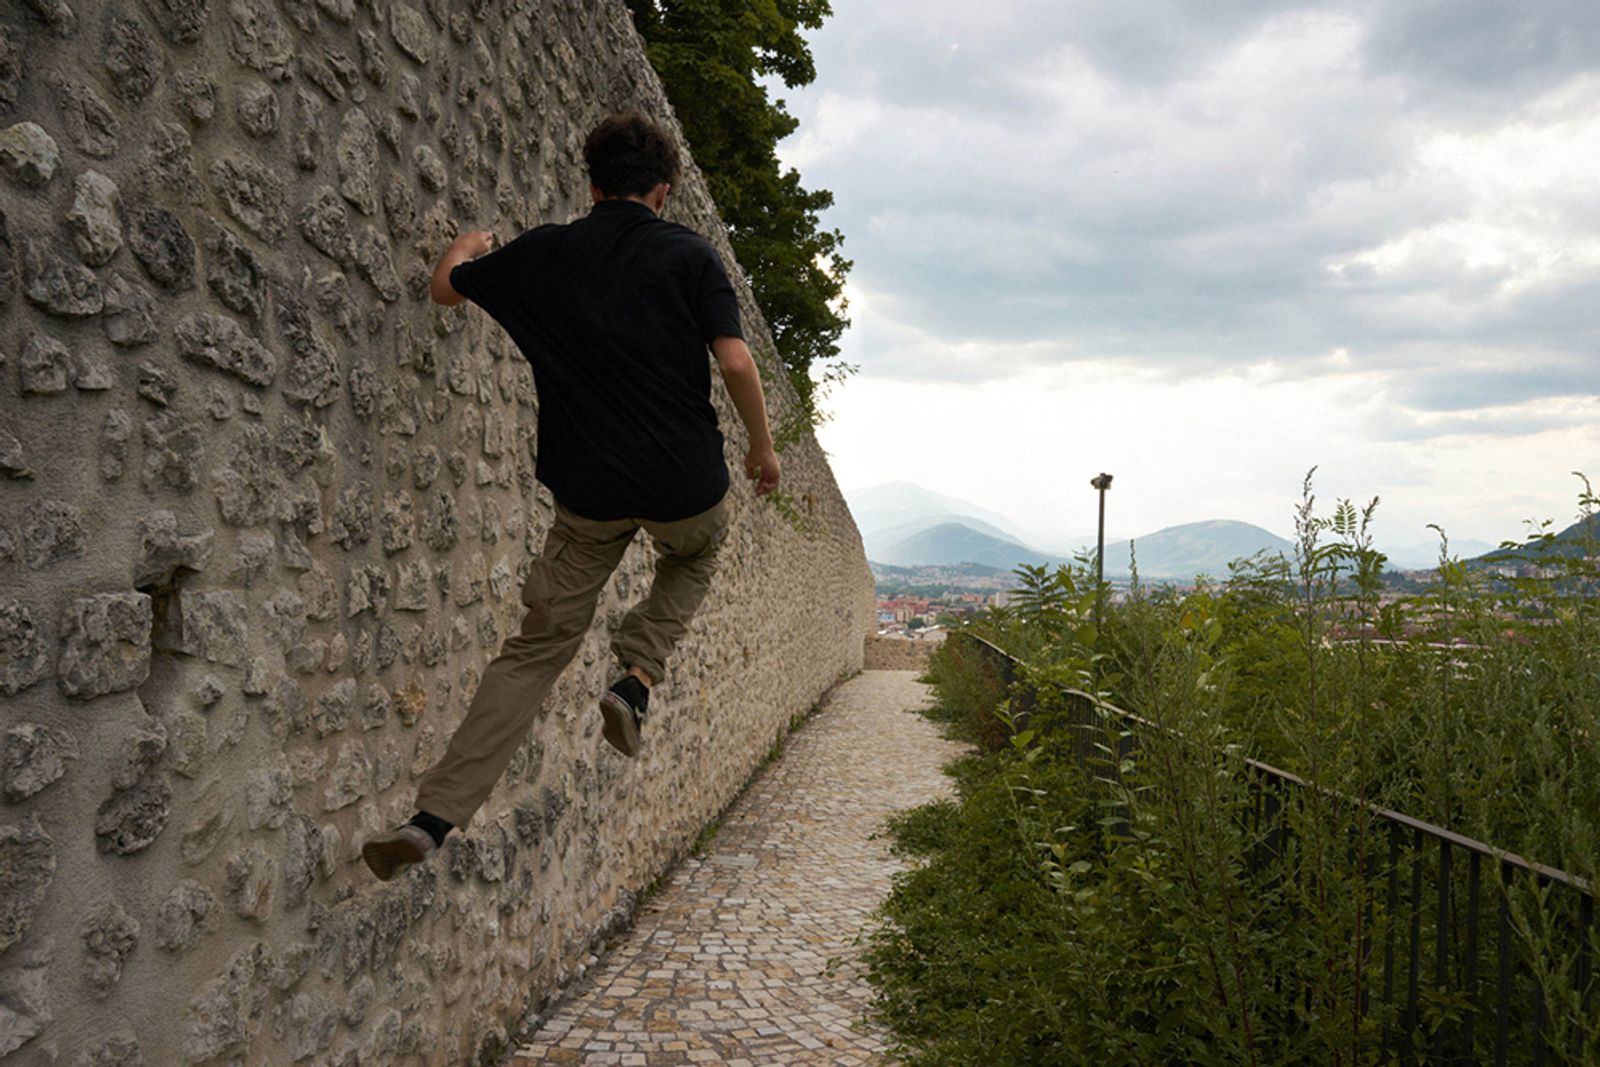 © Danilo Garcia Di Meo - "Tuft" that jumps on the city walls